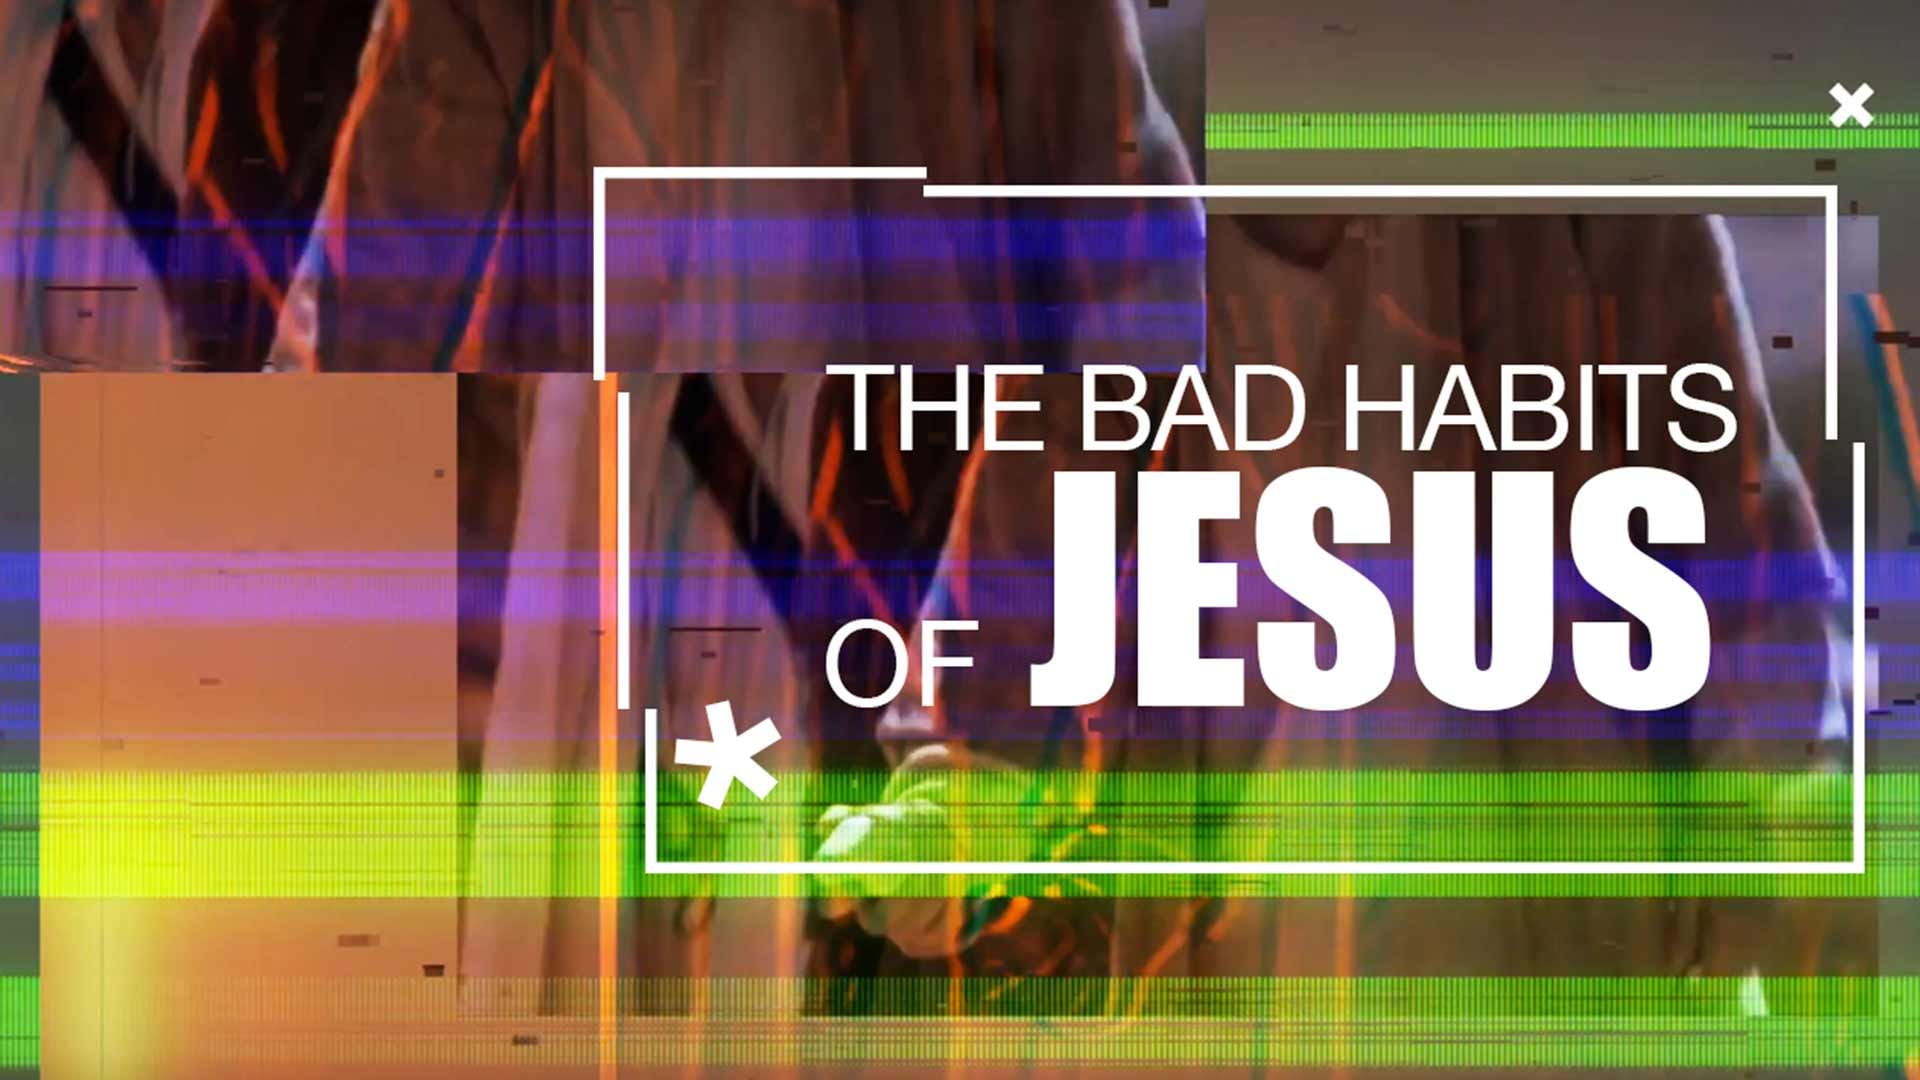 The bad habits of Jesus